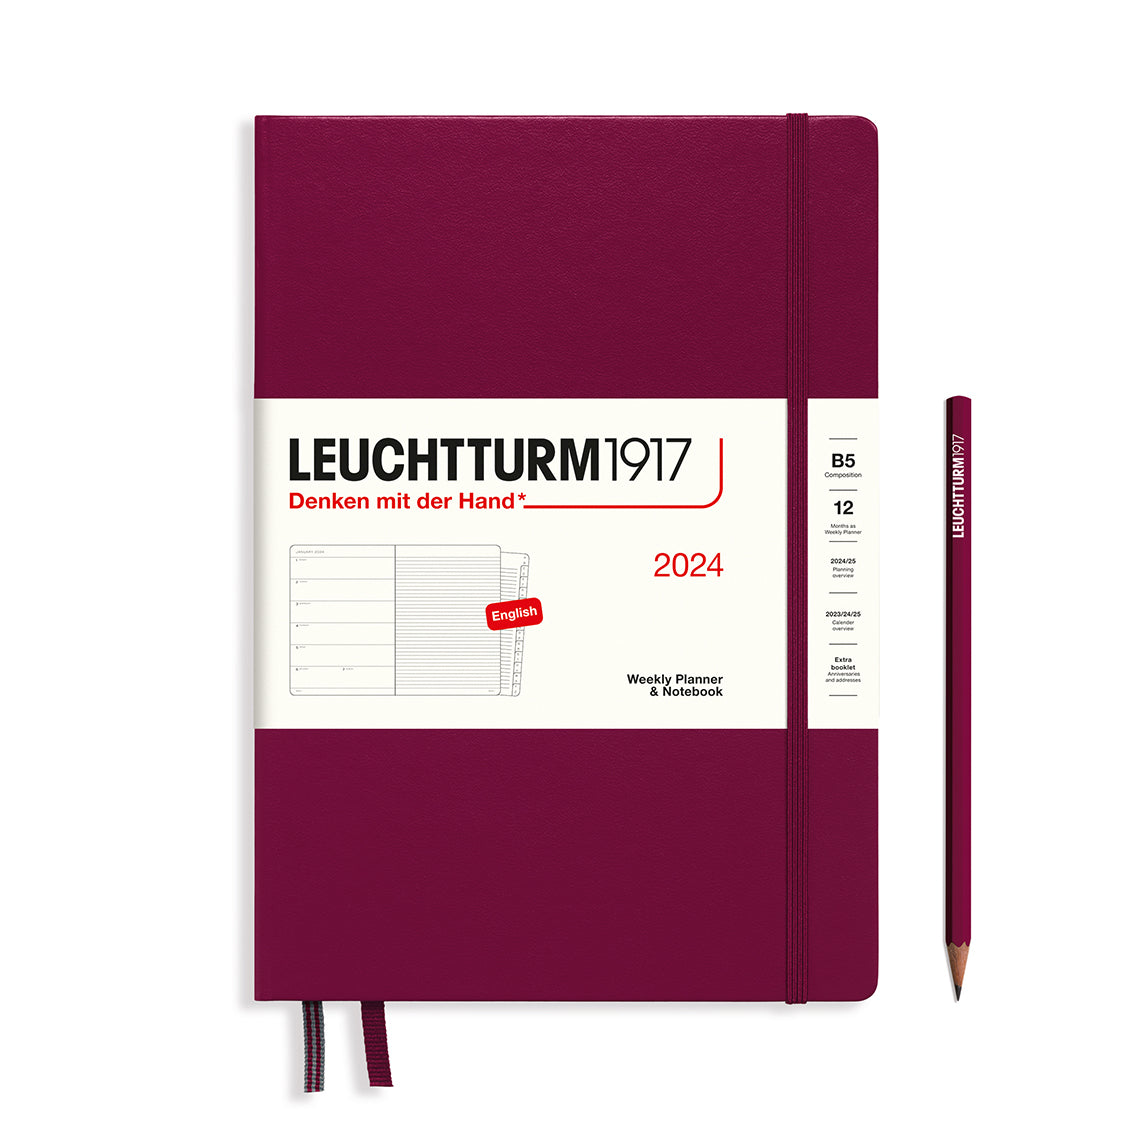 Leuchtturm 2023 agenda hardcover composition b5 week